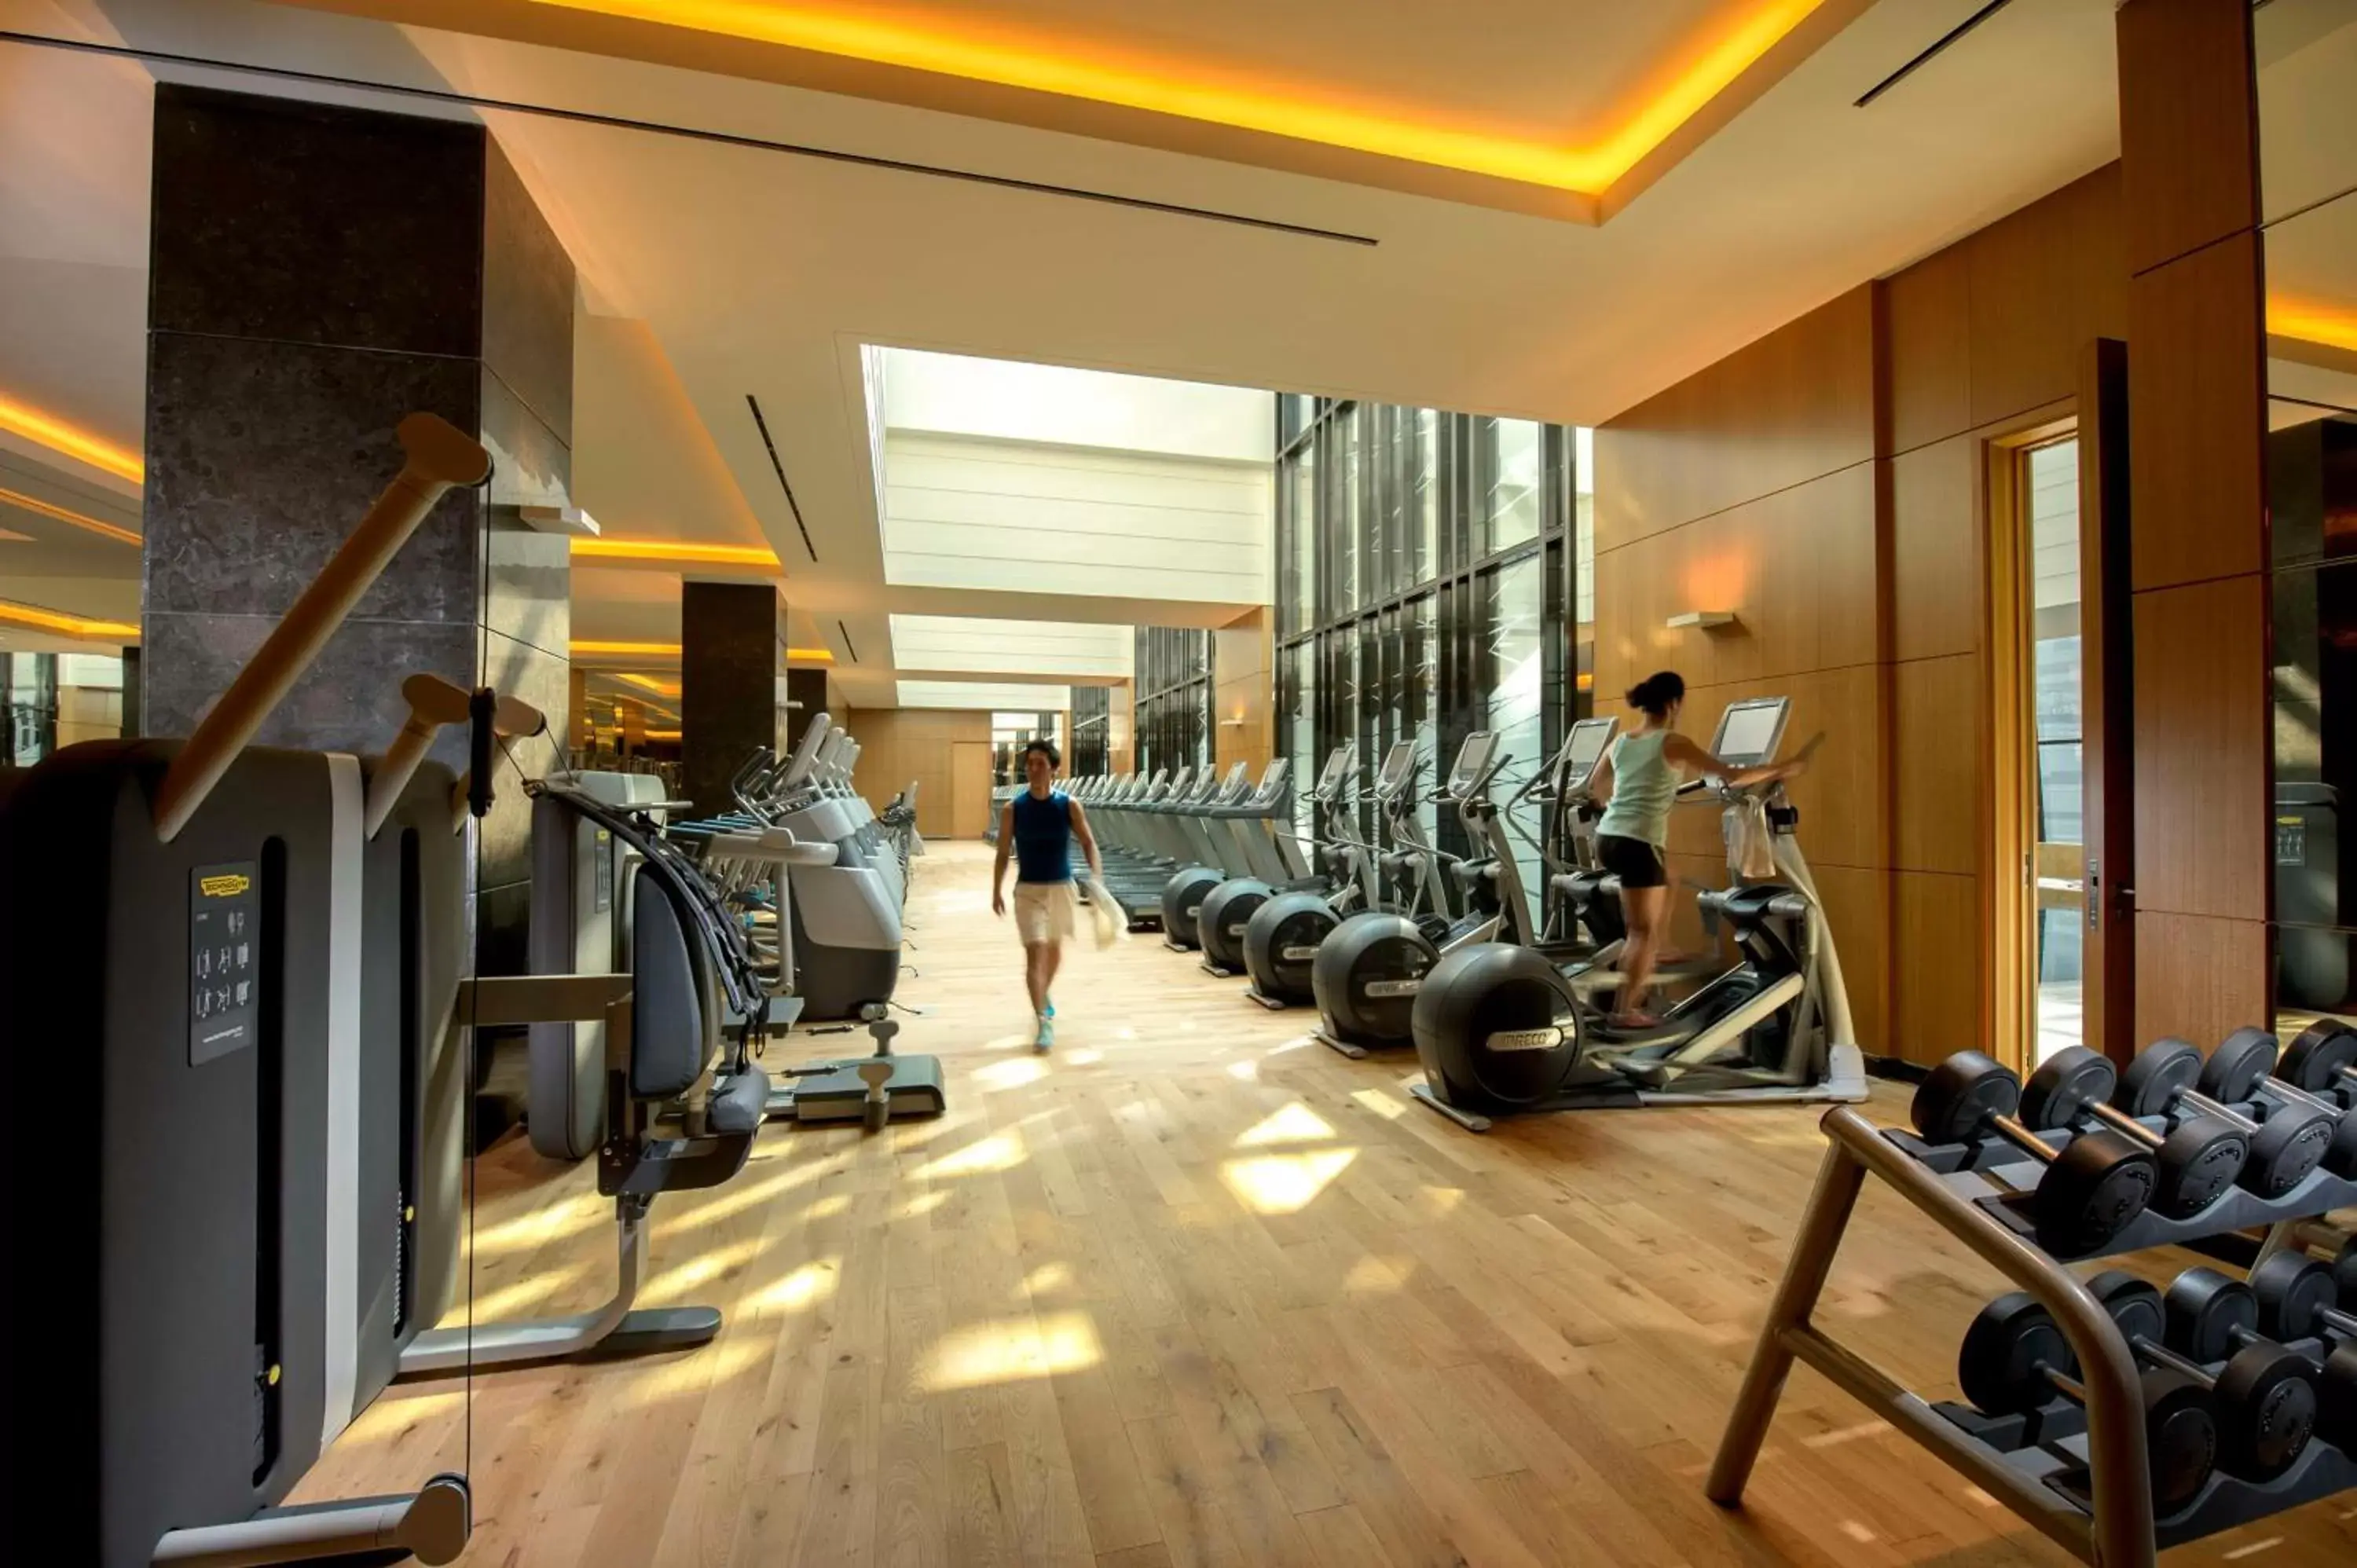 Fitness centre/facilities, Fitness Center/Facilities in Conrad Seoul